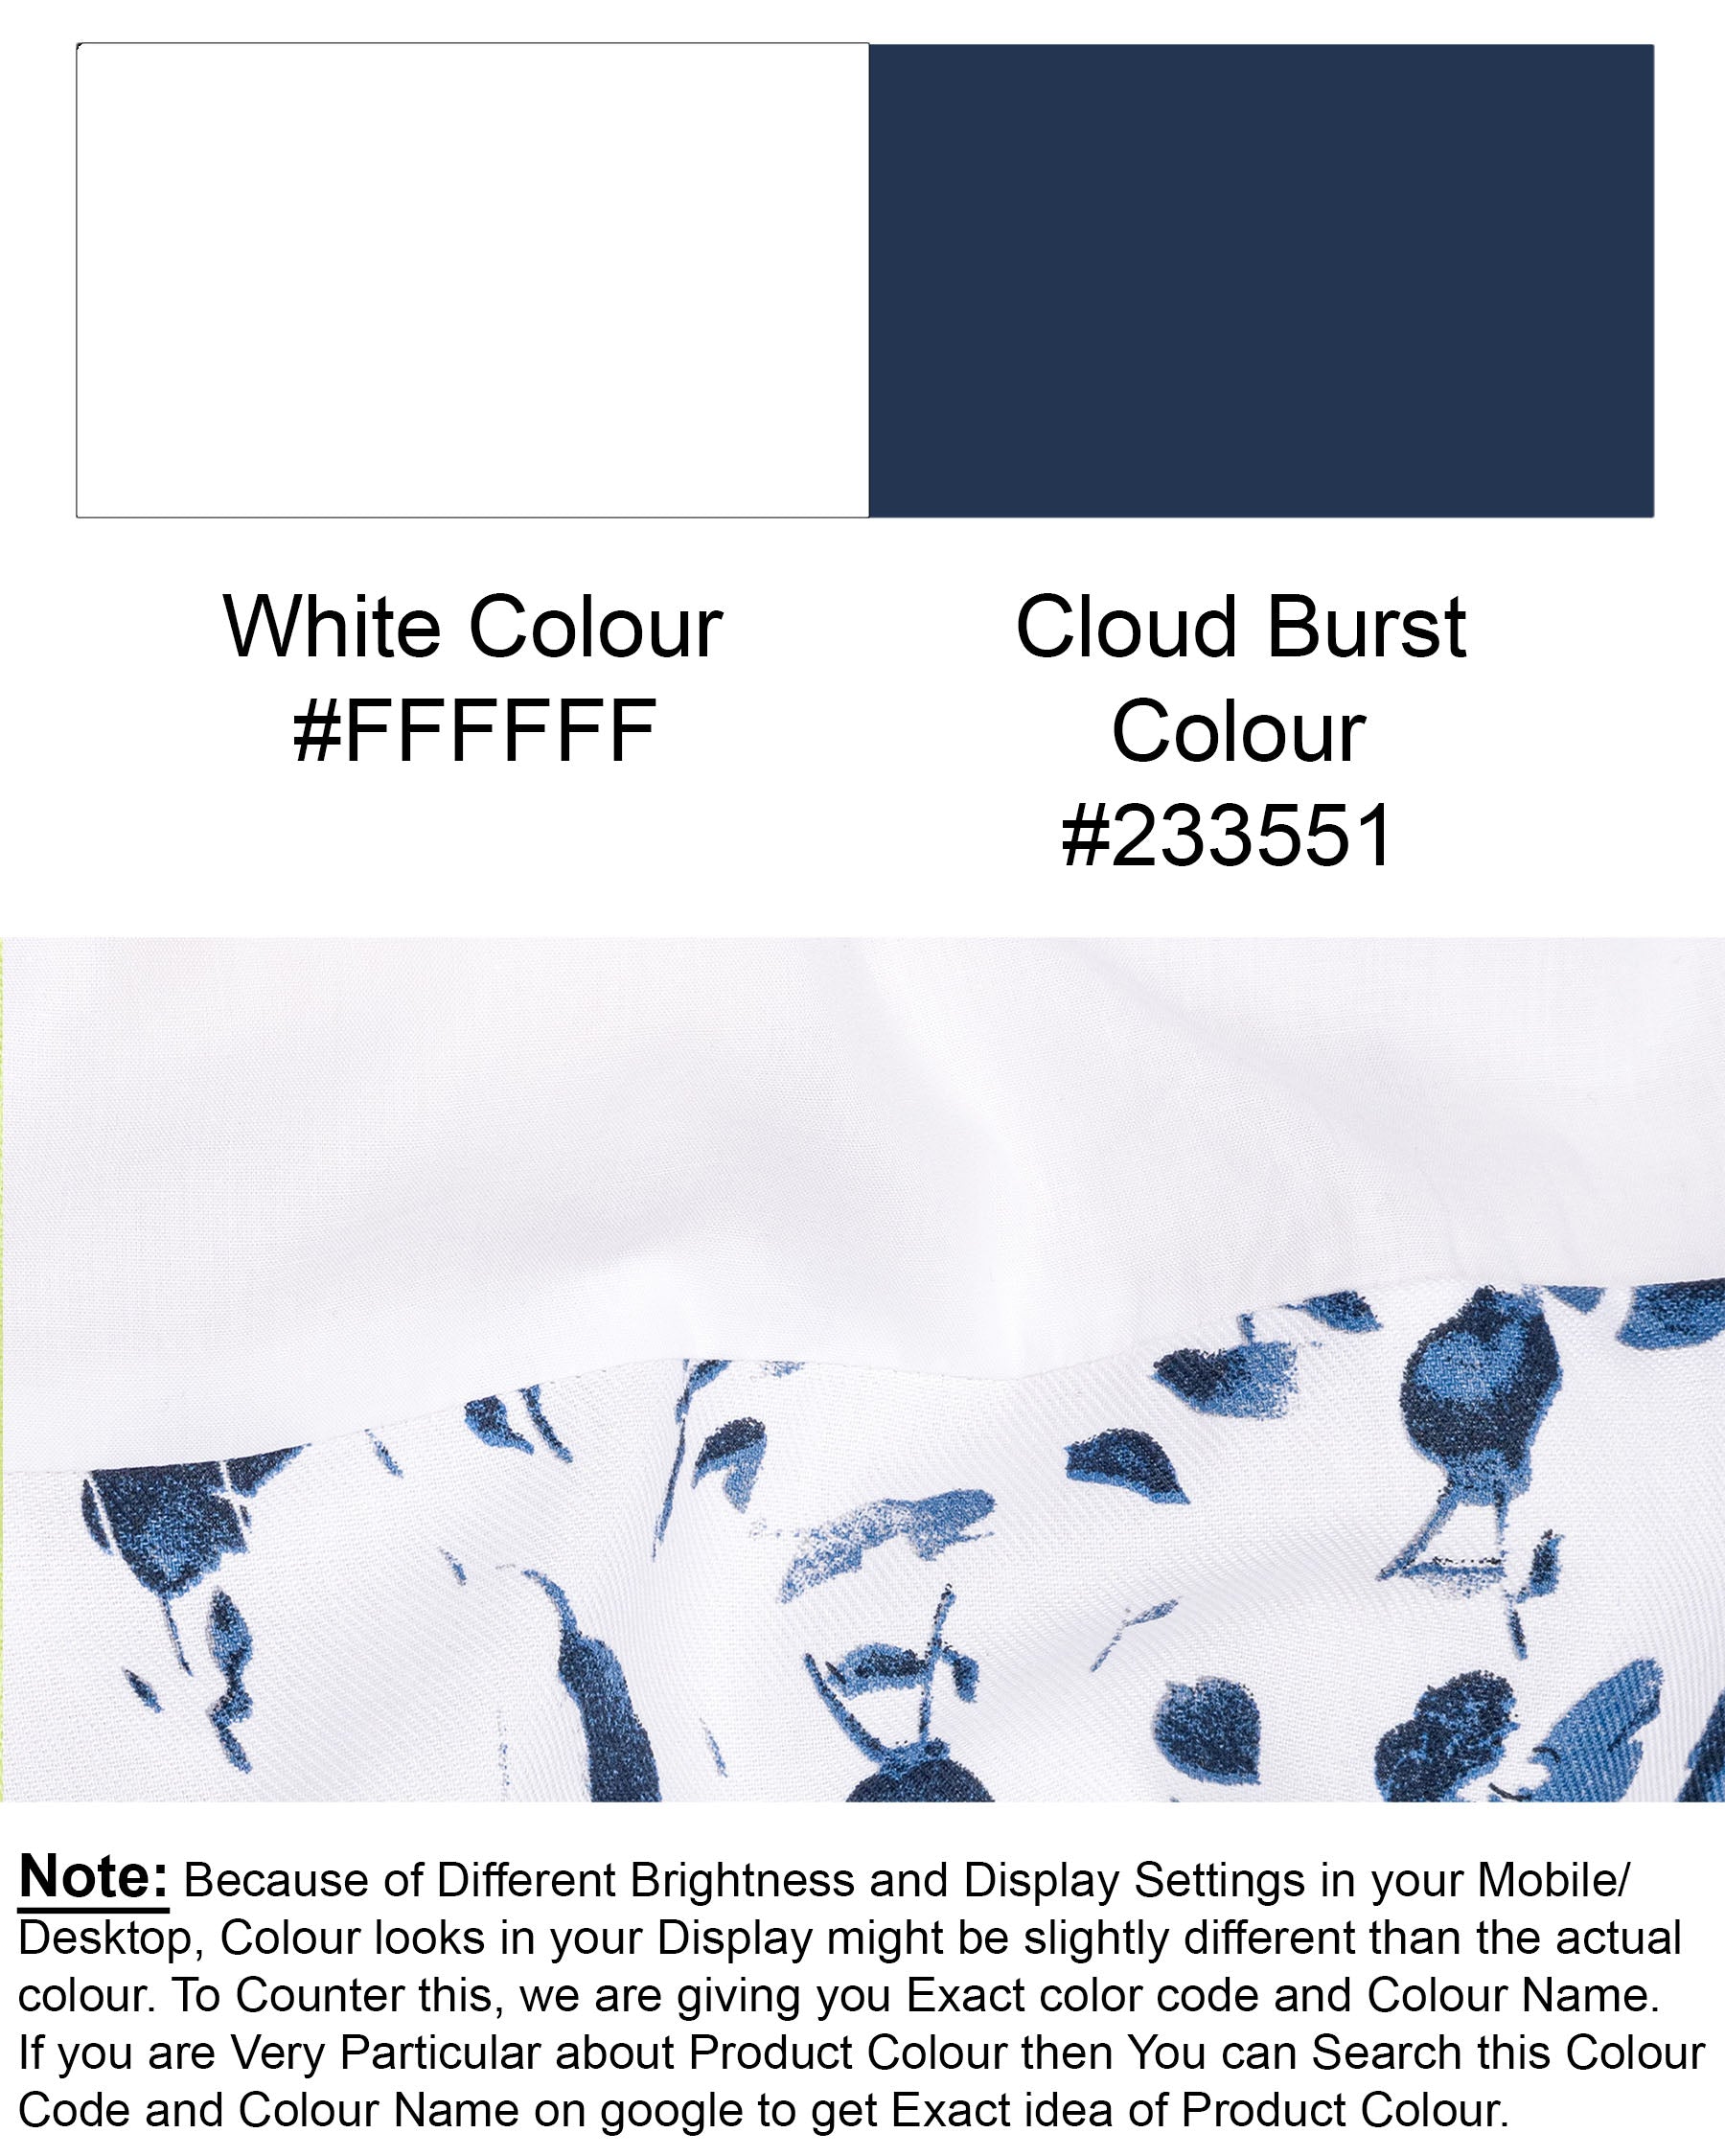 White and Cloud Burst Leaves Printed Premium Cotton Shirt 6990-P127-38,6990-P127-38,6990-P127-39,6990-P127-39,6990-P127-40,6990-P127-40,6990-P127-42,6990-P127-42,6990-P127-44,6990-P127-44,6990-P127-46,6990-P127-46,6990-P127-48,6990-P127-48,6990-P127-50,6990-P127-50,6990-P127-52,6990-P127-52